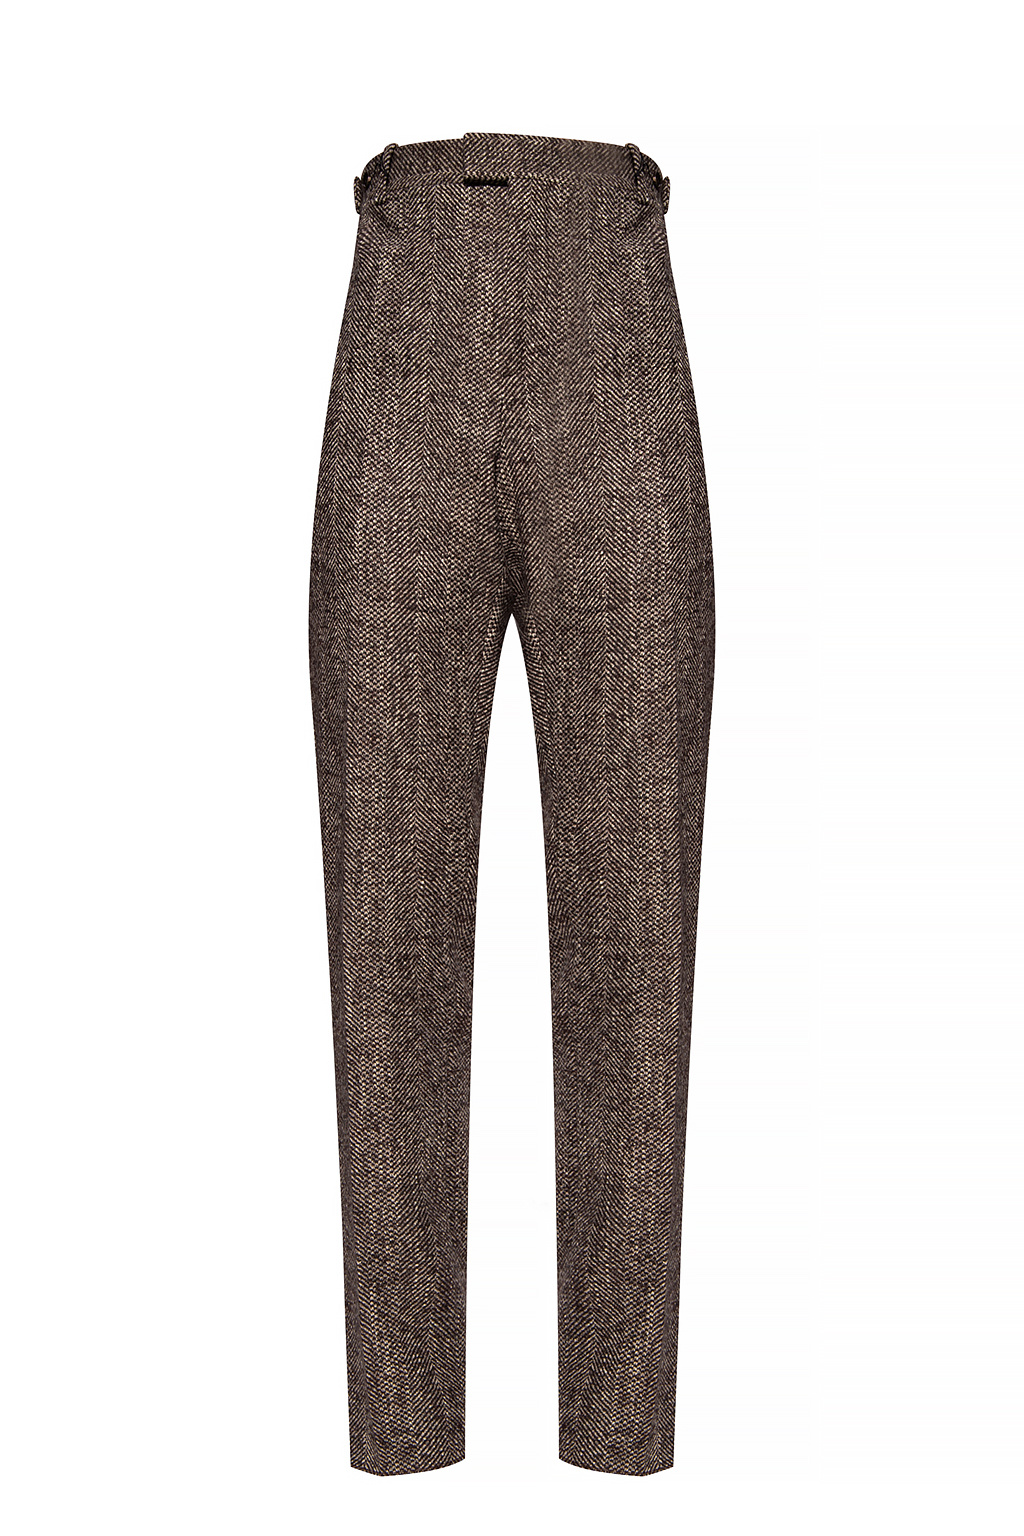 Brown Wool trousers Bottega Veneta - GenesinlifeShops Bhutan